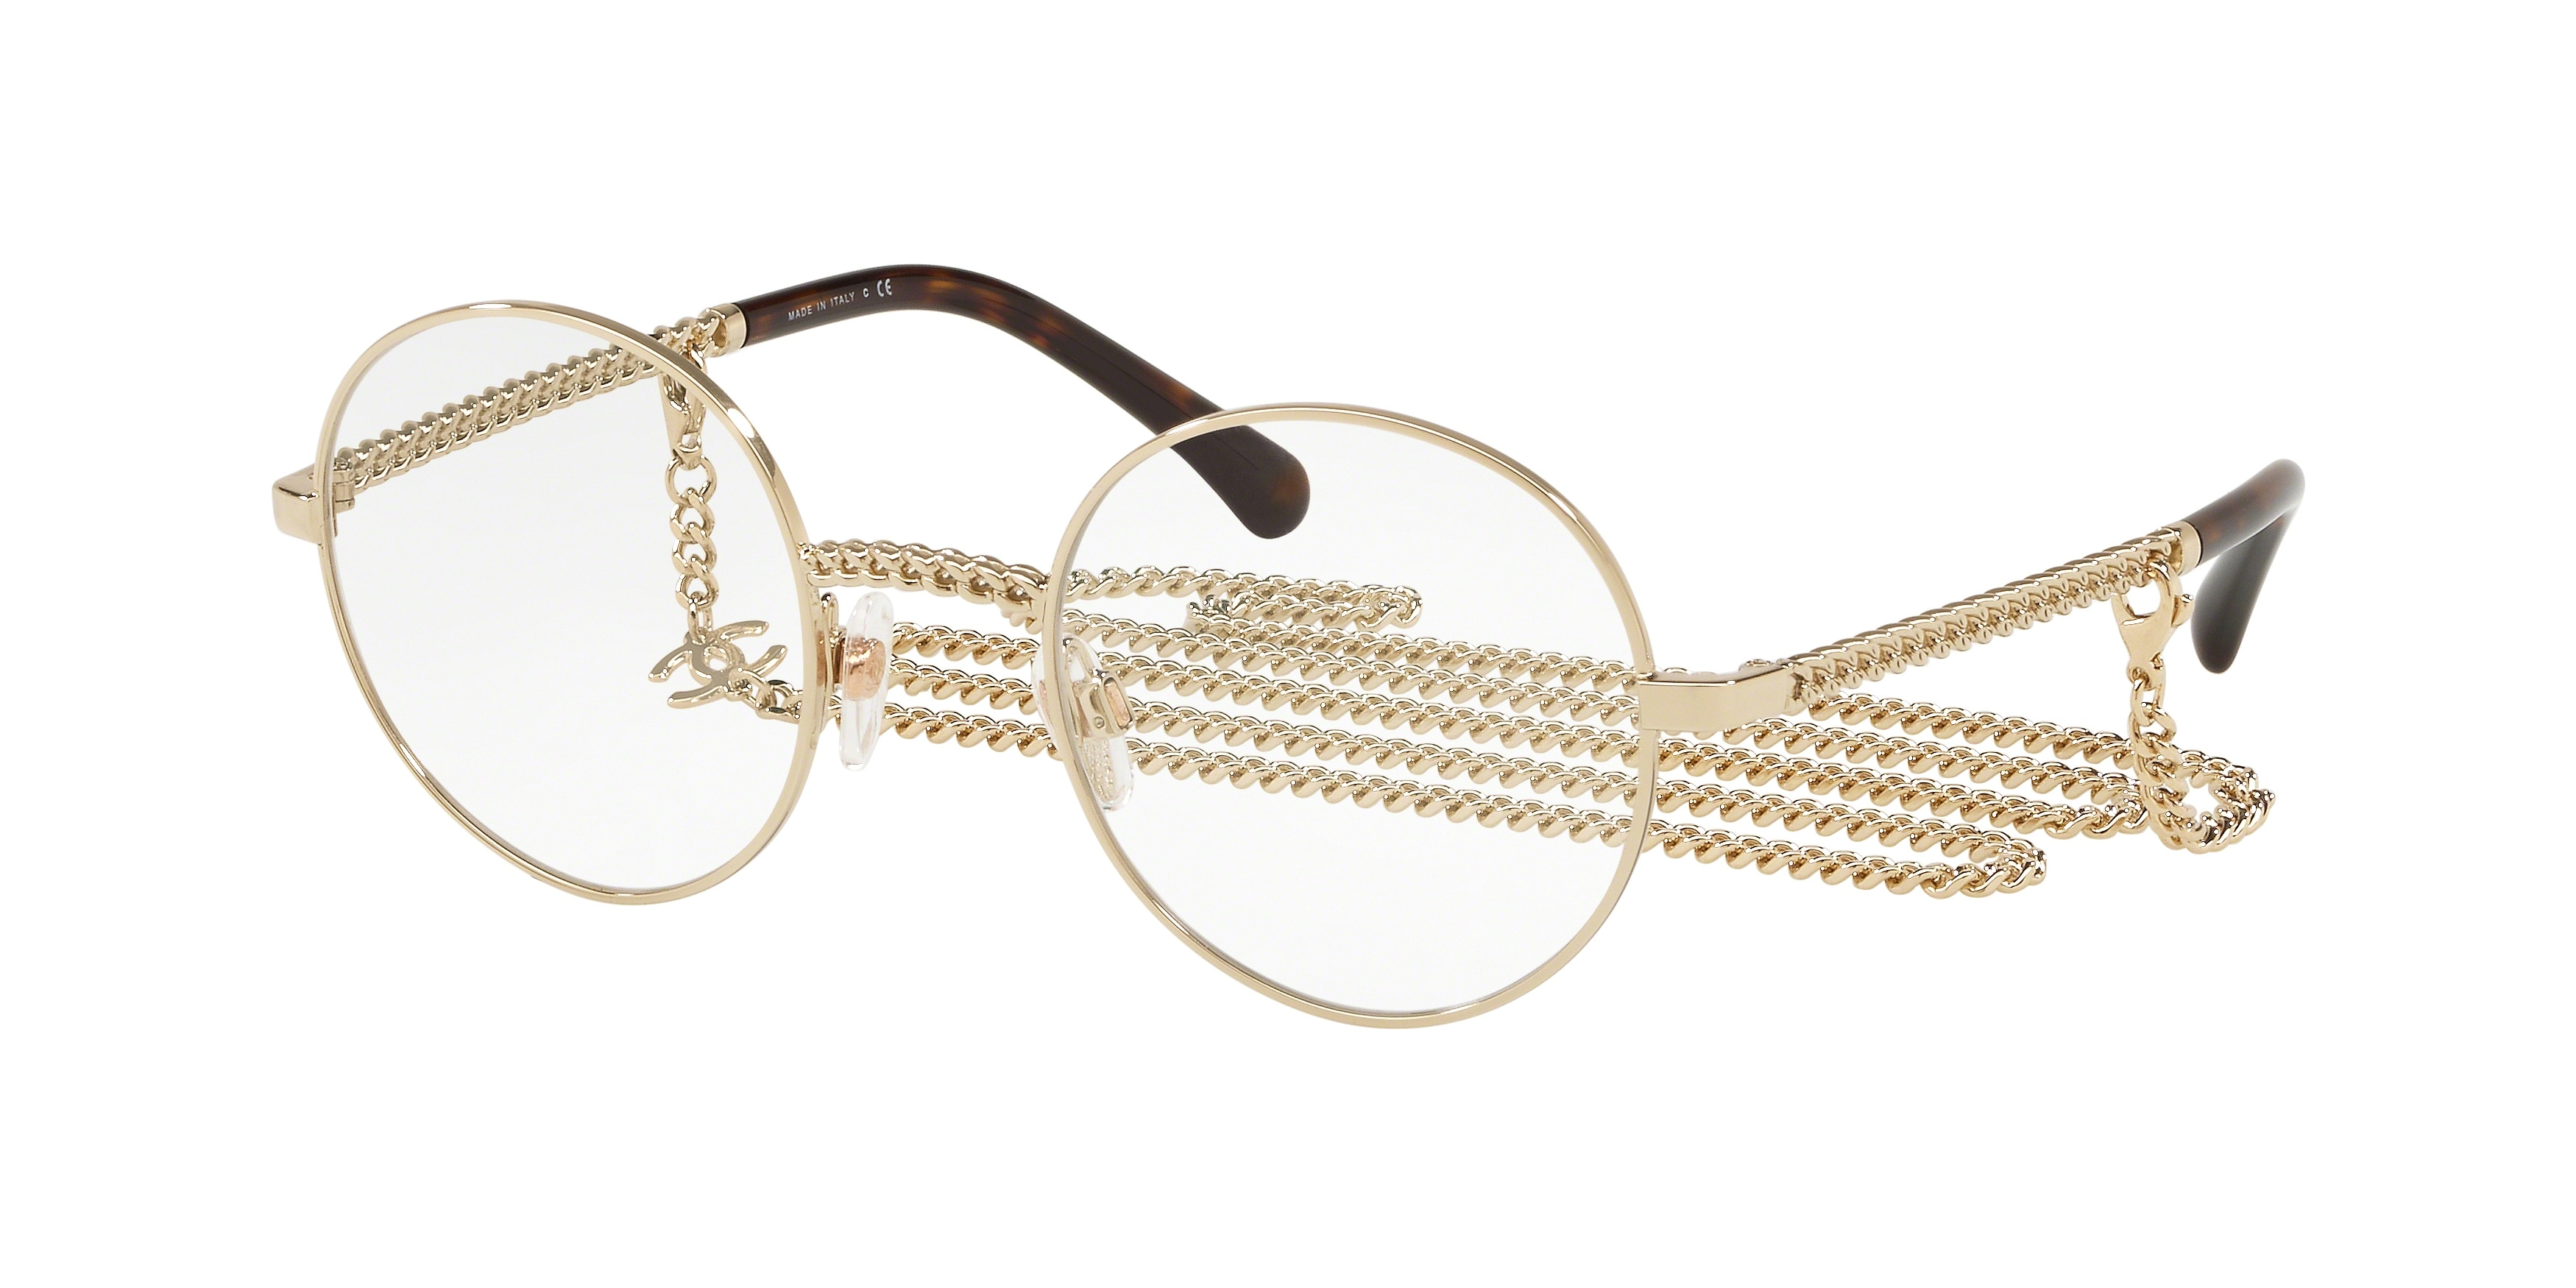 Chanel Glasses - David H Myers